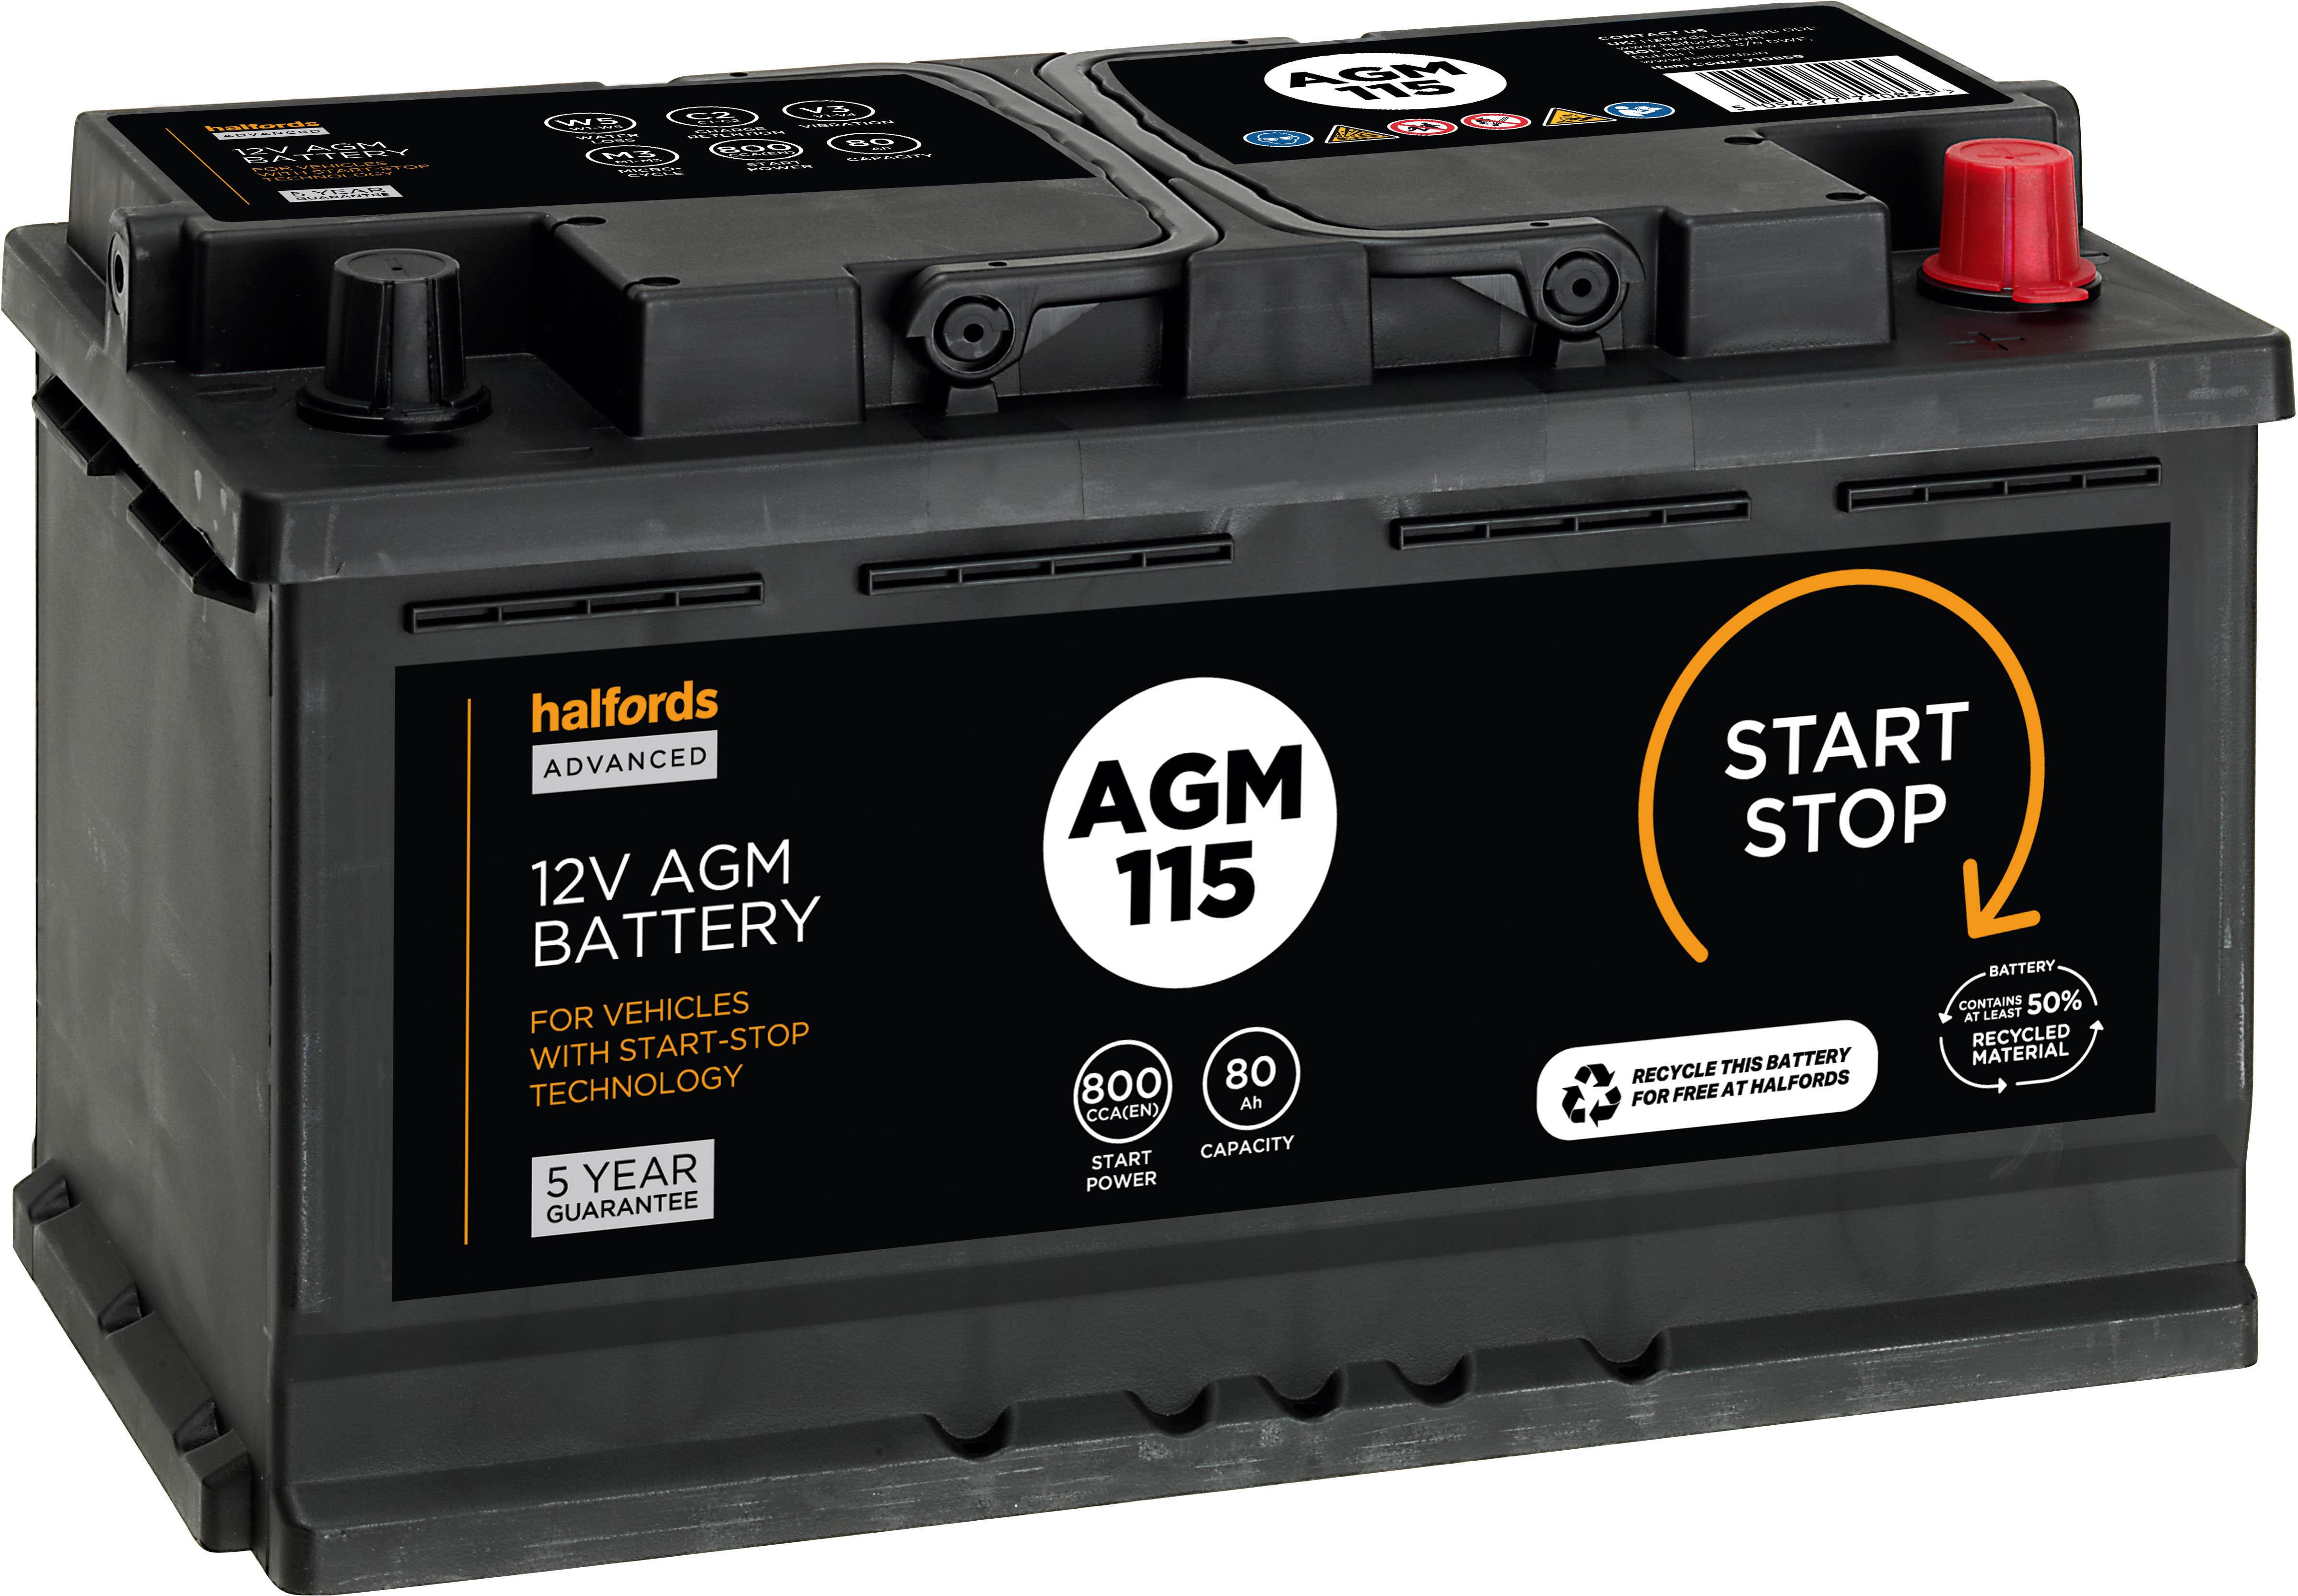 Halfords 115Agm Start/Stop Agm 12V Car Battery 5 Year Guarantee